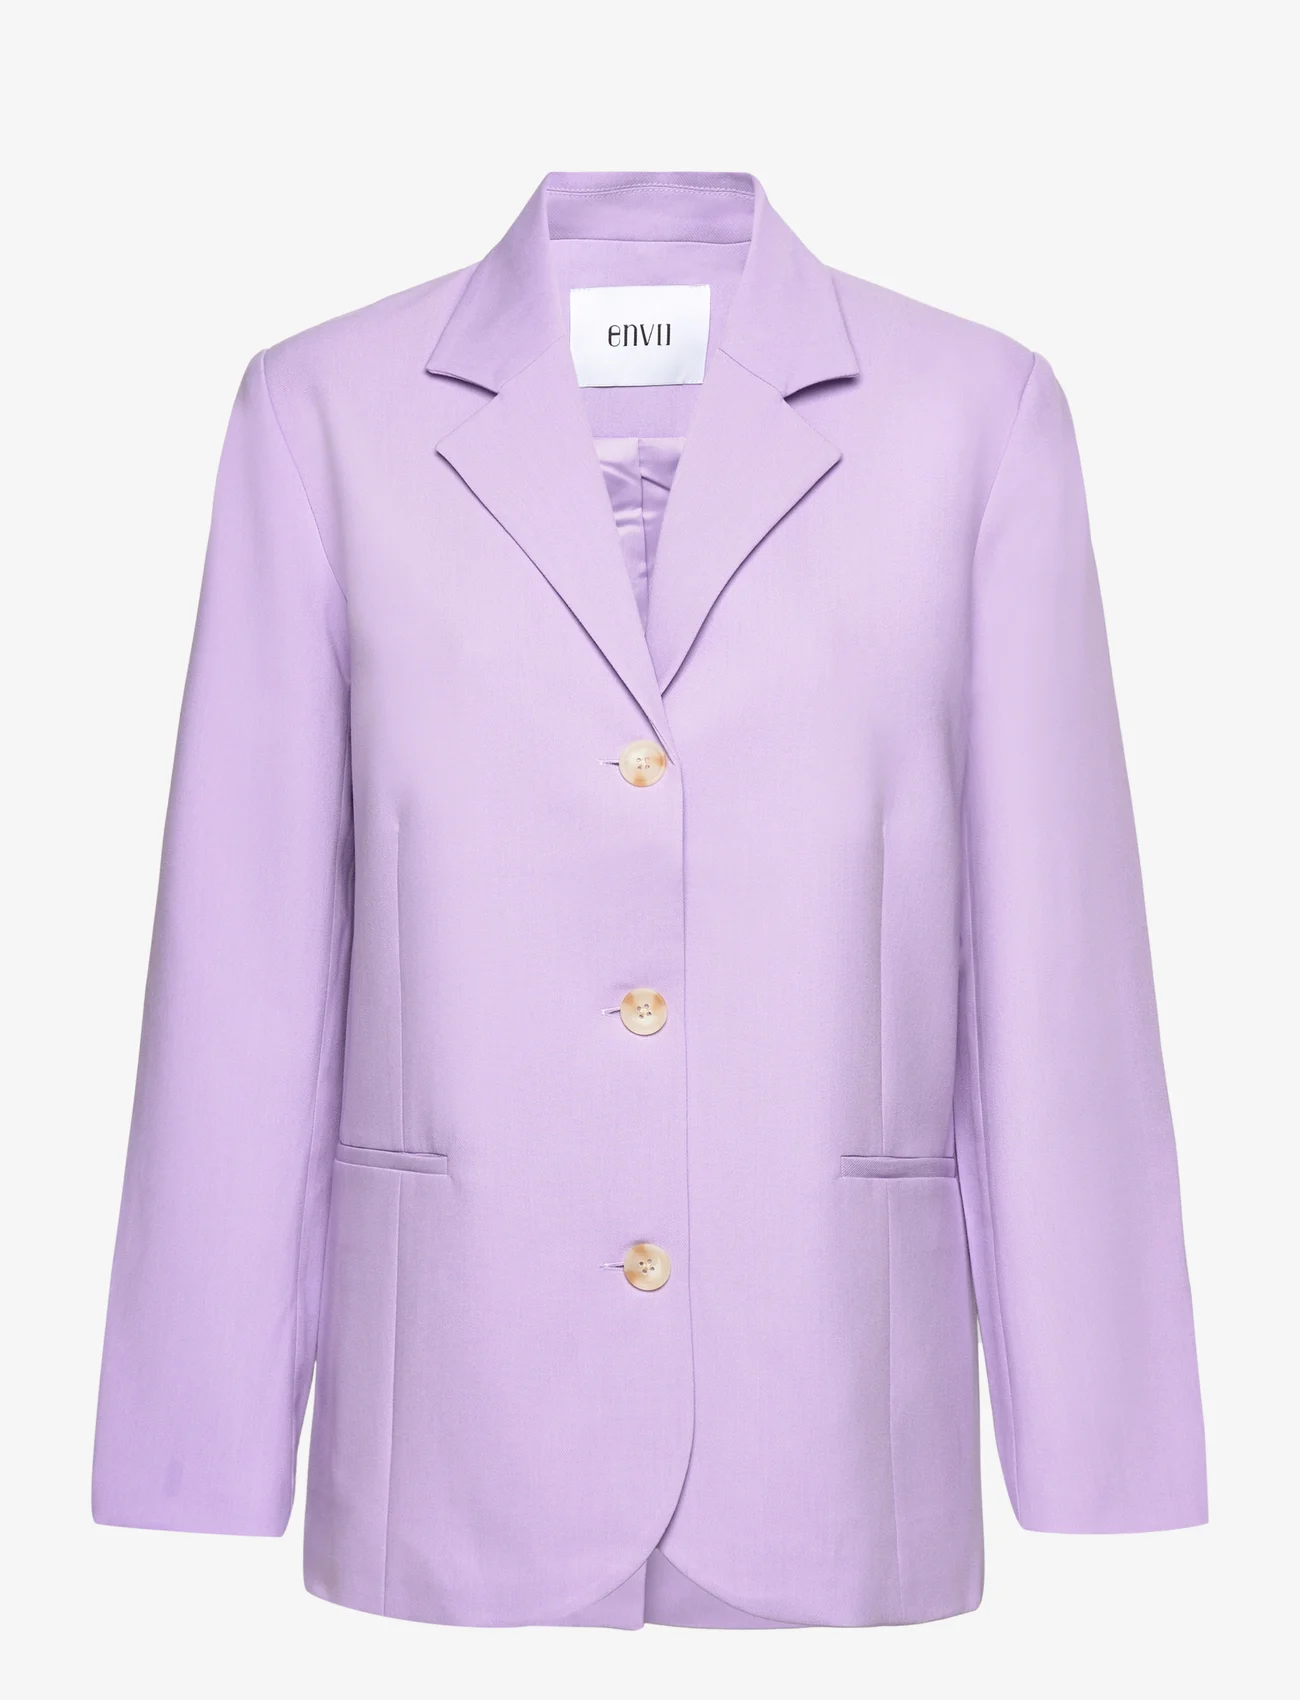 Envii - ENGRAPE BLAZER 6797 - ballīšu apģērbs par outlet cenām - purple rose - 0